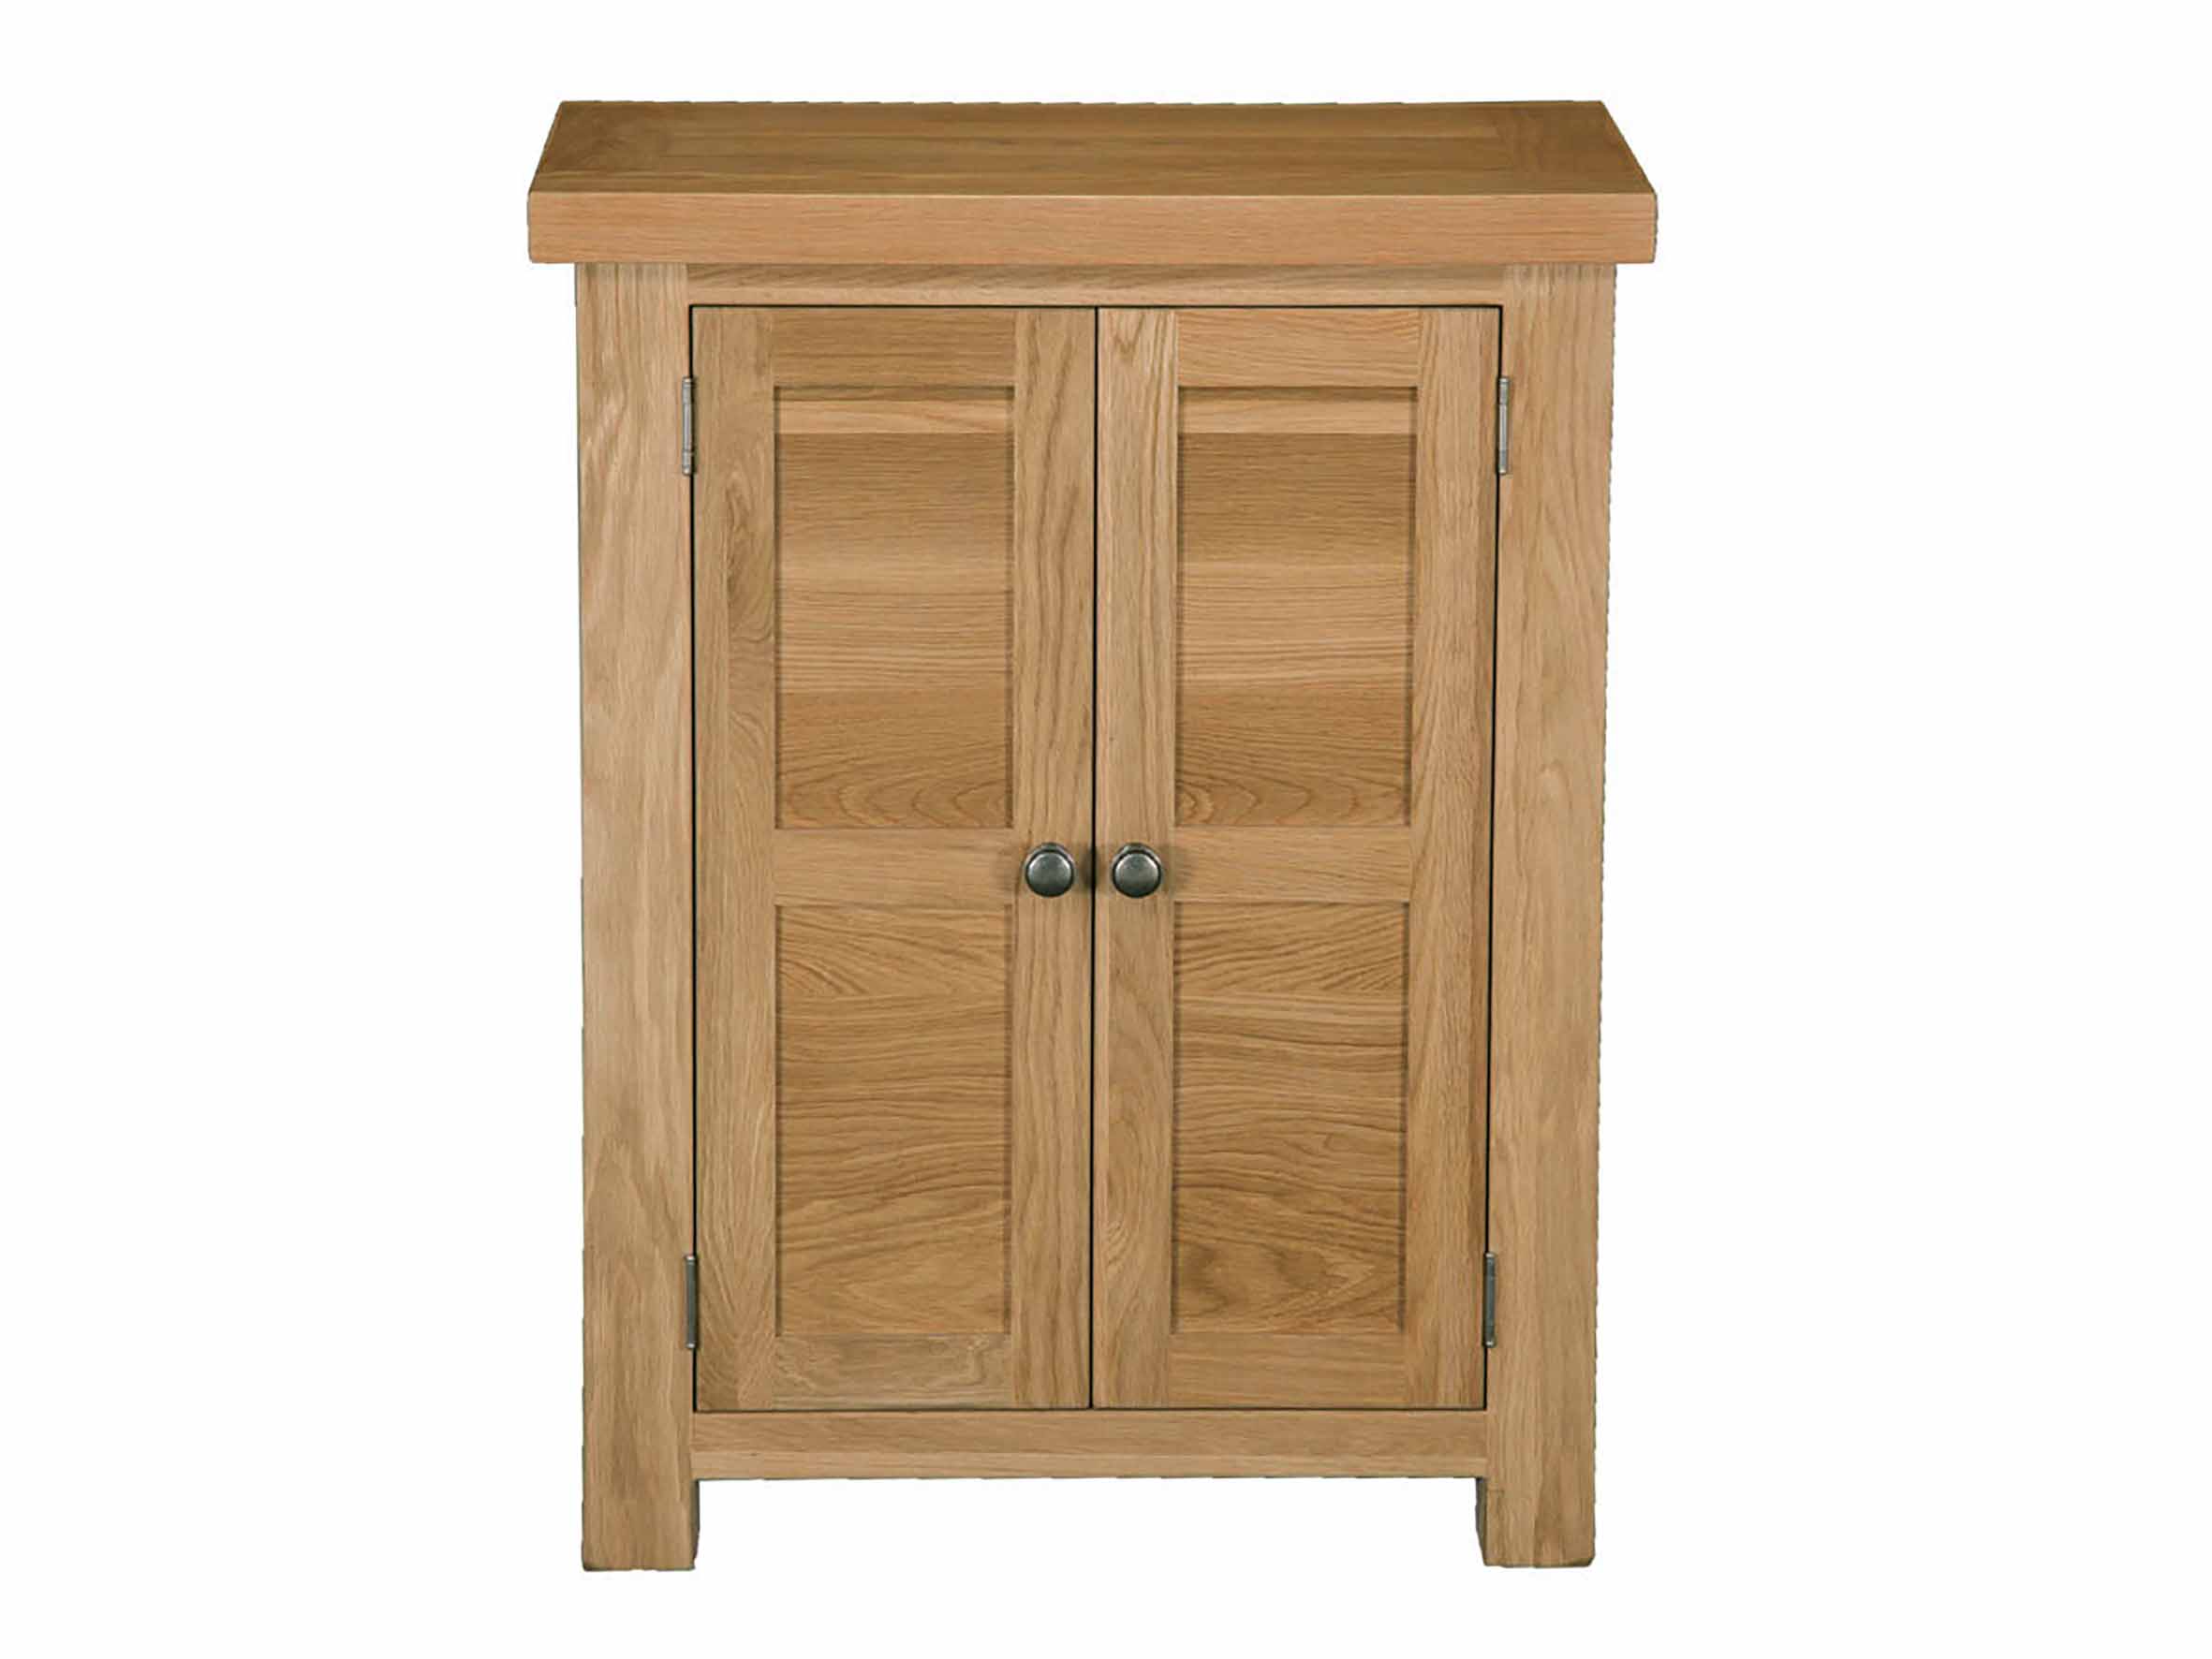 Eton Solid Oak Shoe Cabinet from Top Secret Furniture